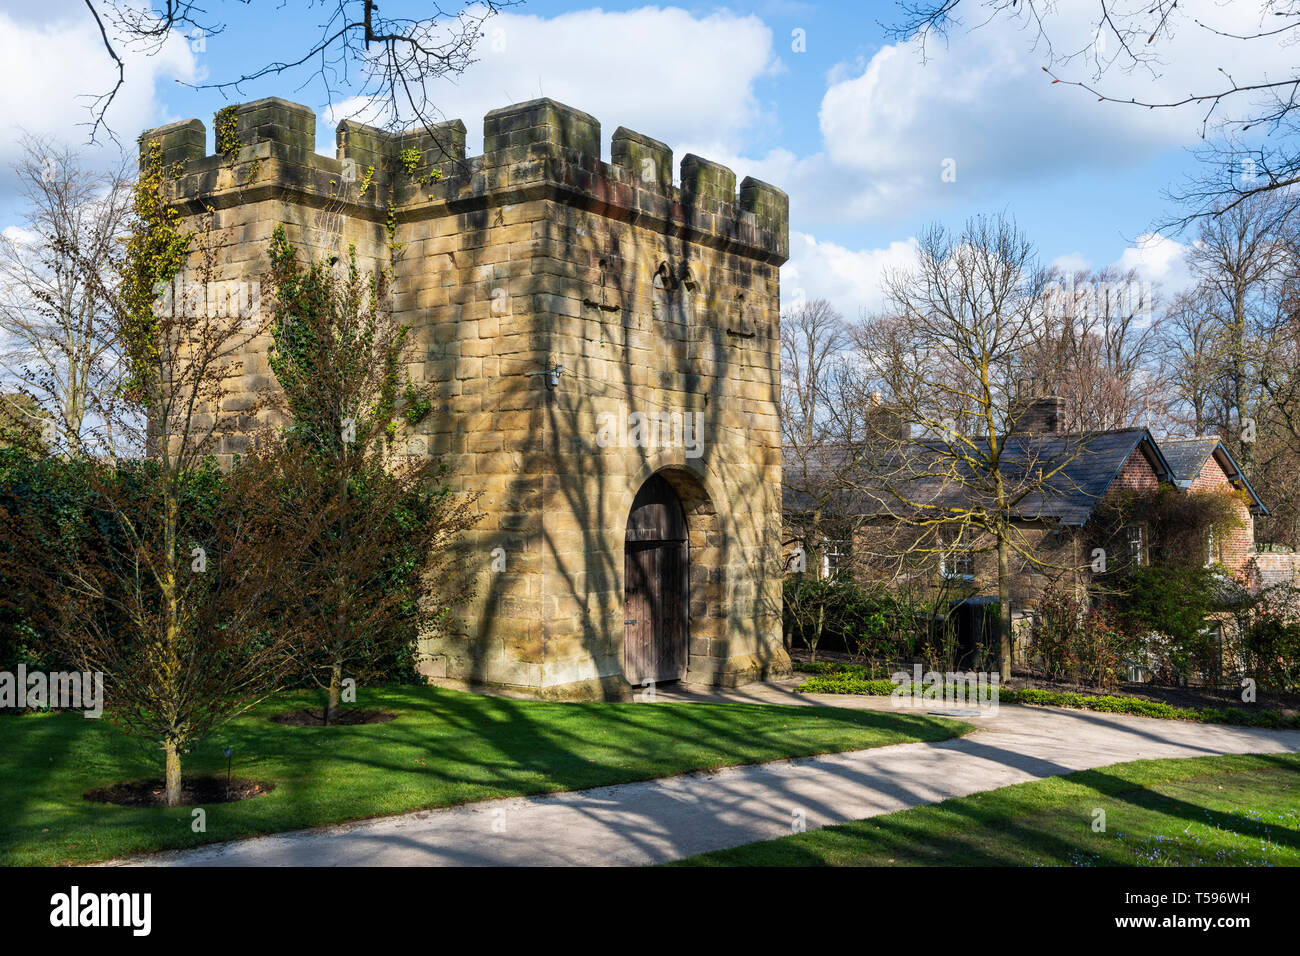 Old gateway in walled garden at Alnwick Garden, Alnwick, Northumberland, England, UK Stock Photo